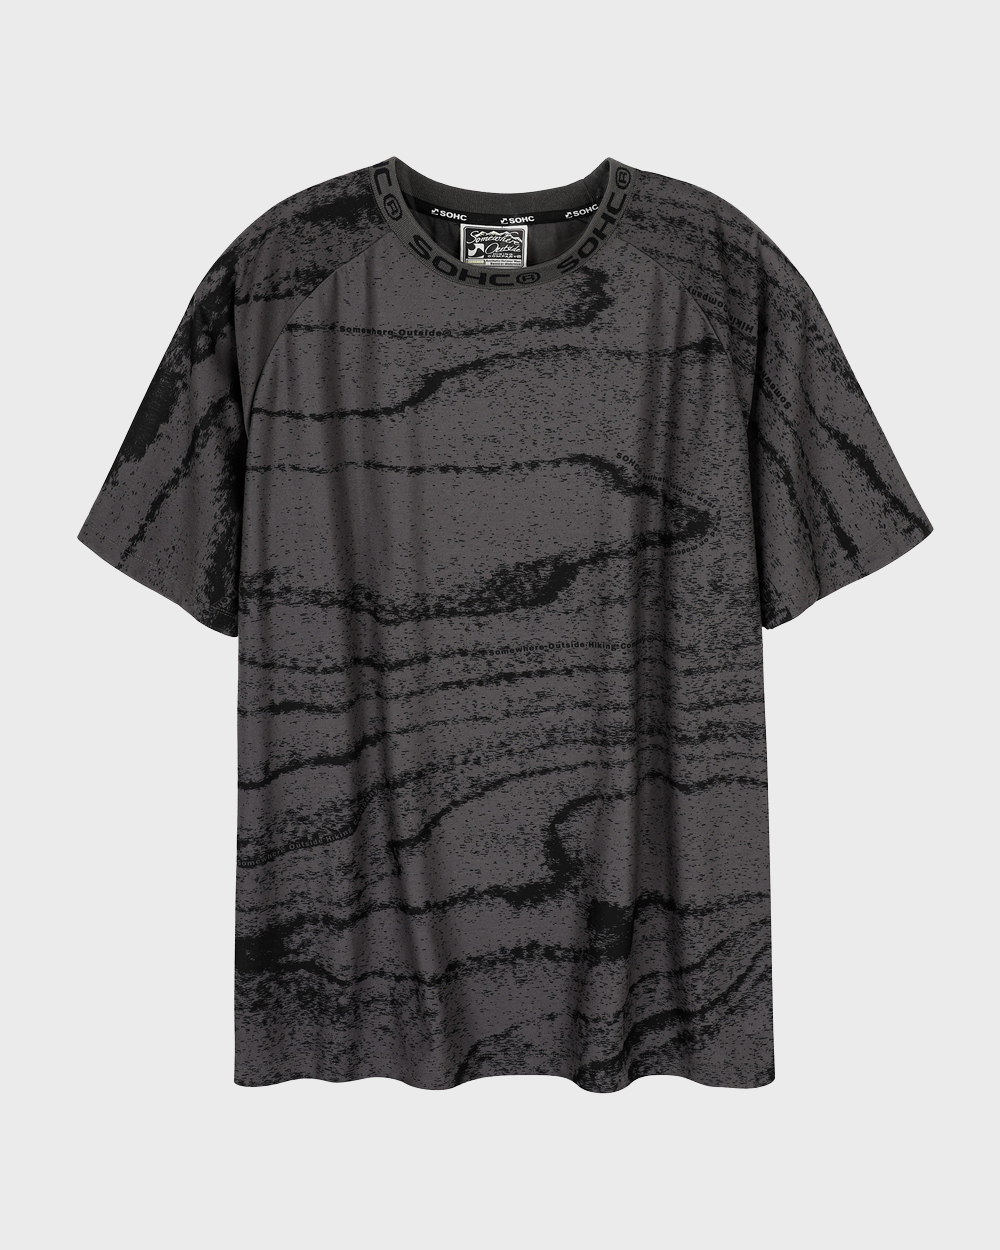 Oak Cross-section Graphic T-shirt Graphic T-Shirt (Charcoal)